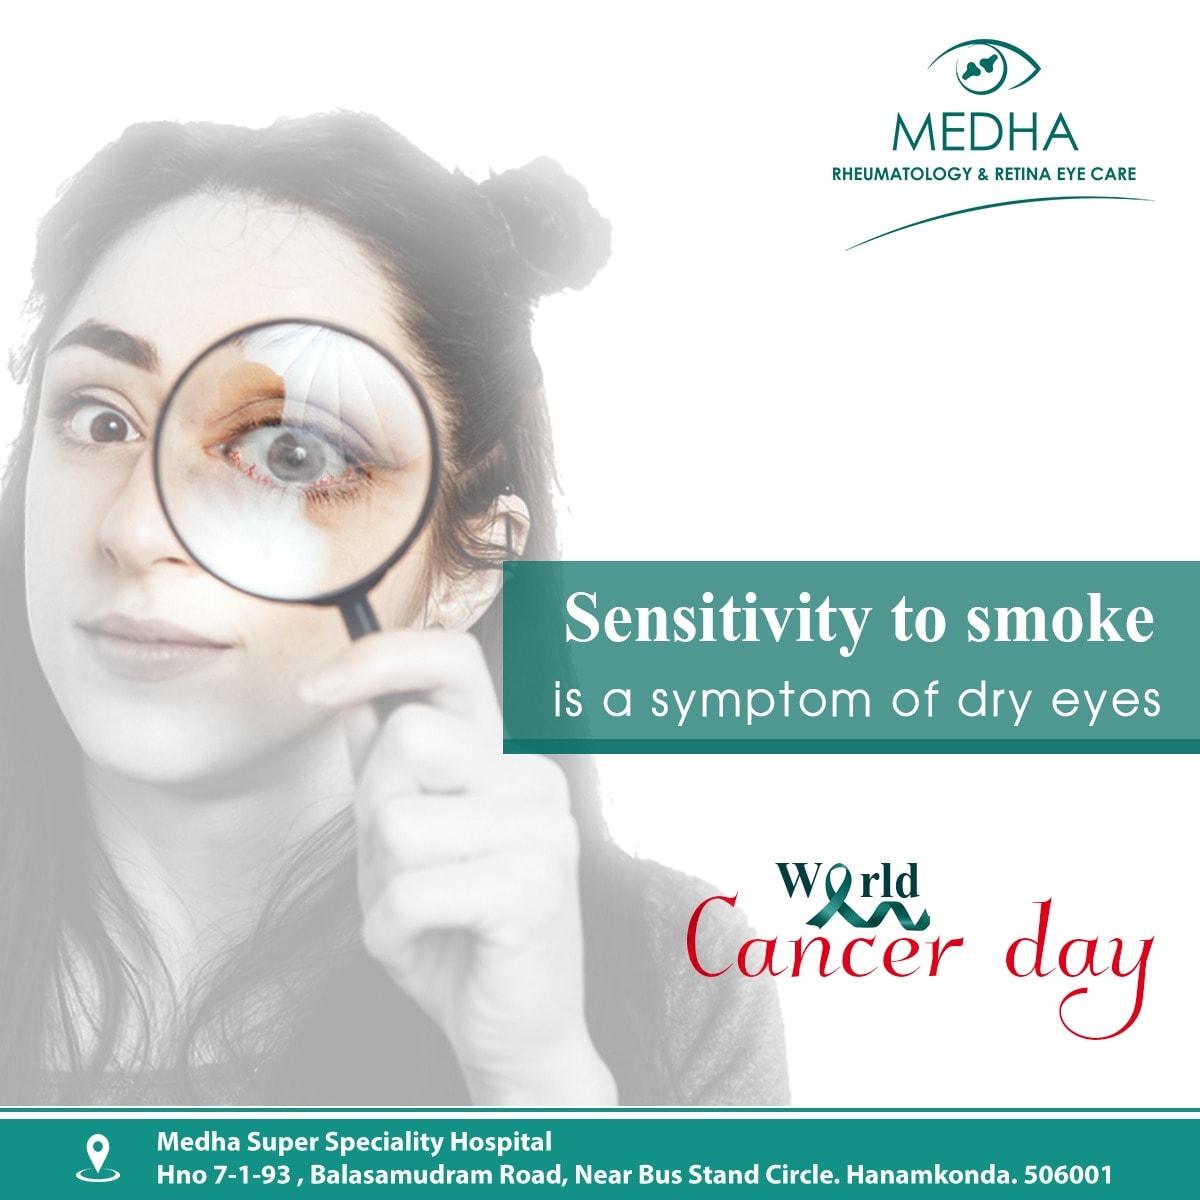 SENSITIVITY to SMOKE is a symptom of DRY EYES